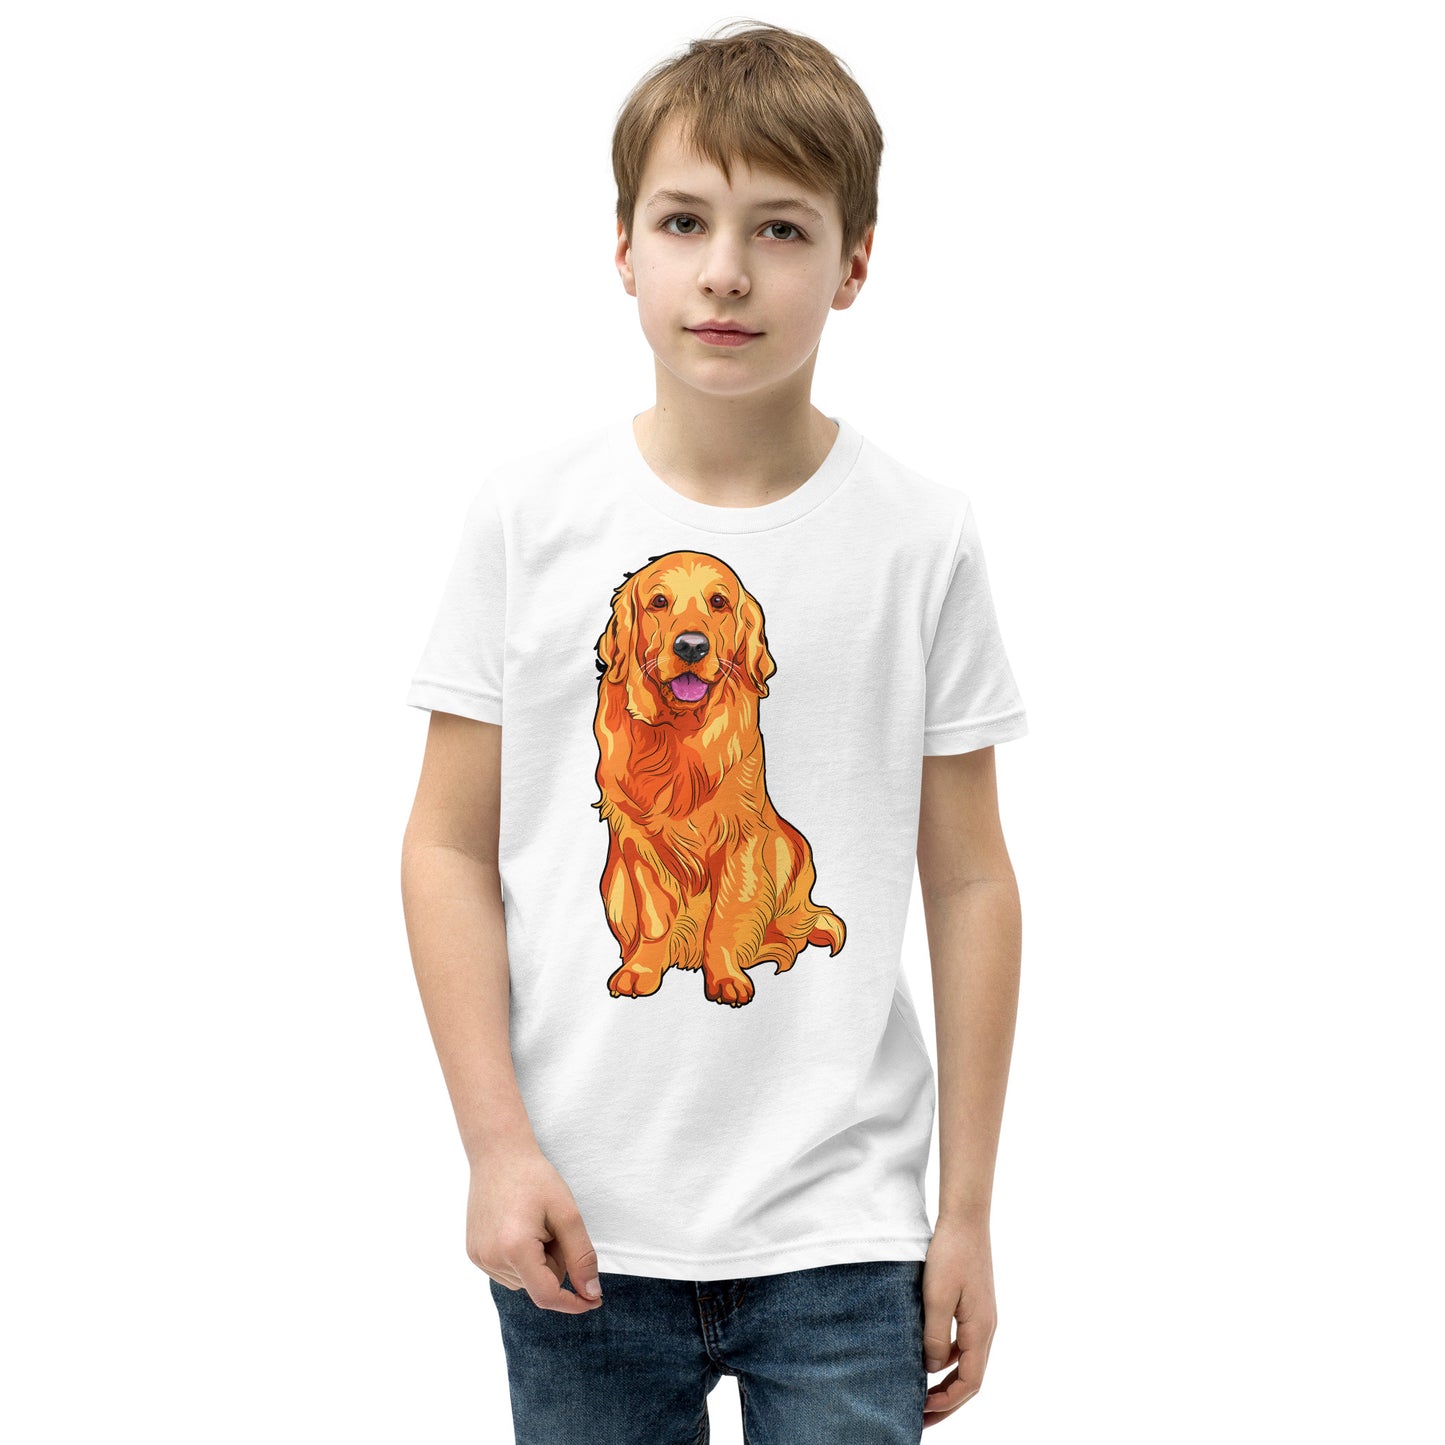 Cool Golden Retriever Dog T-shirt, No. 0581